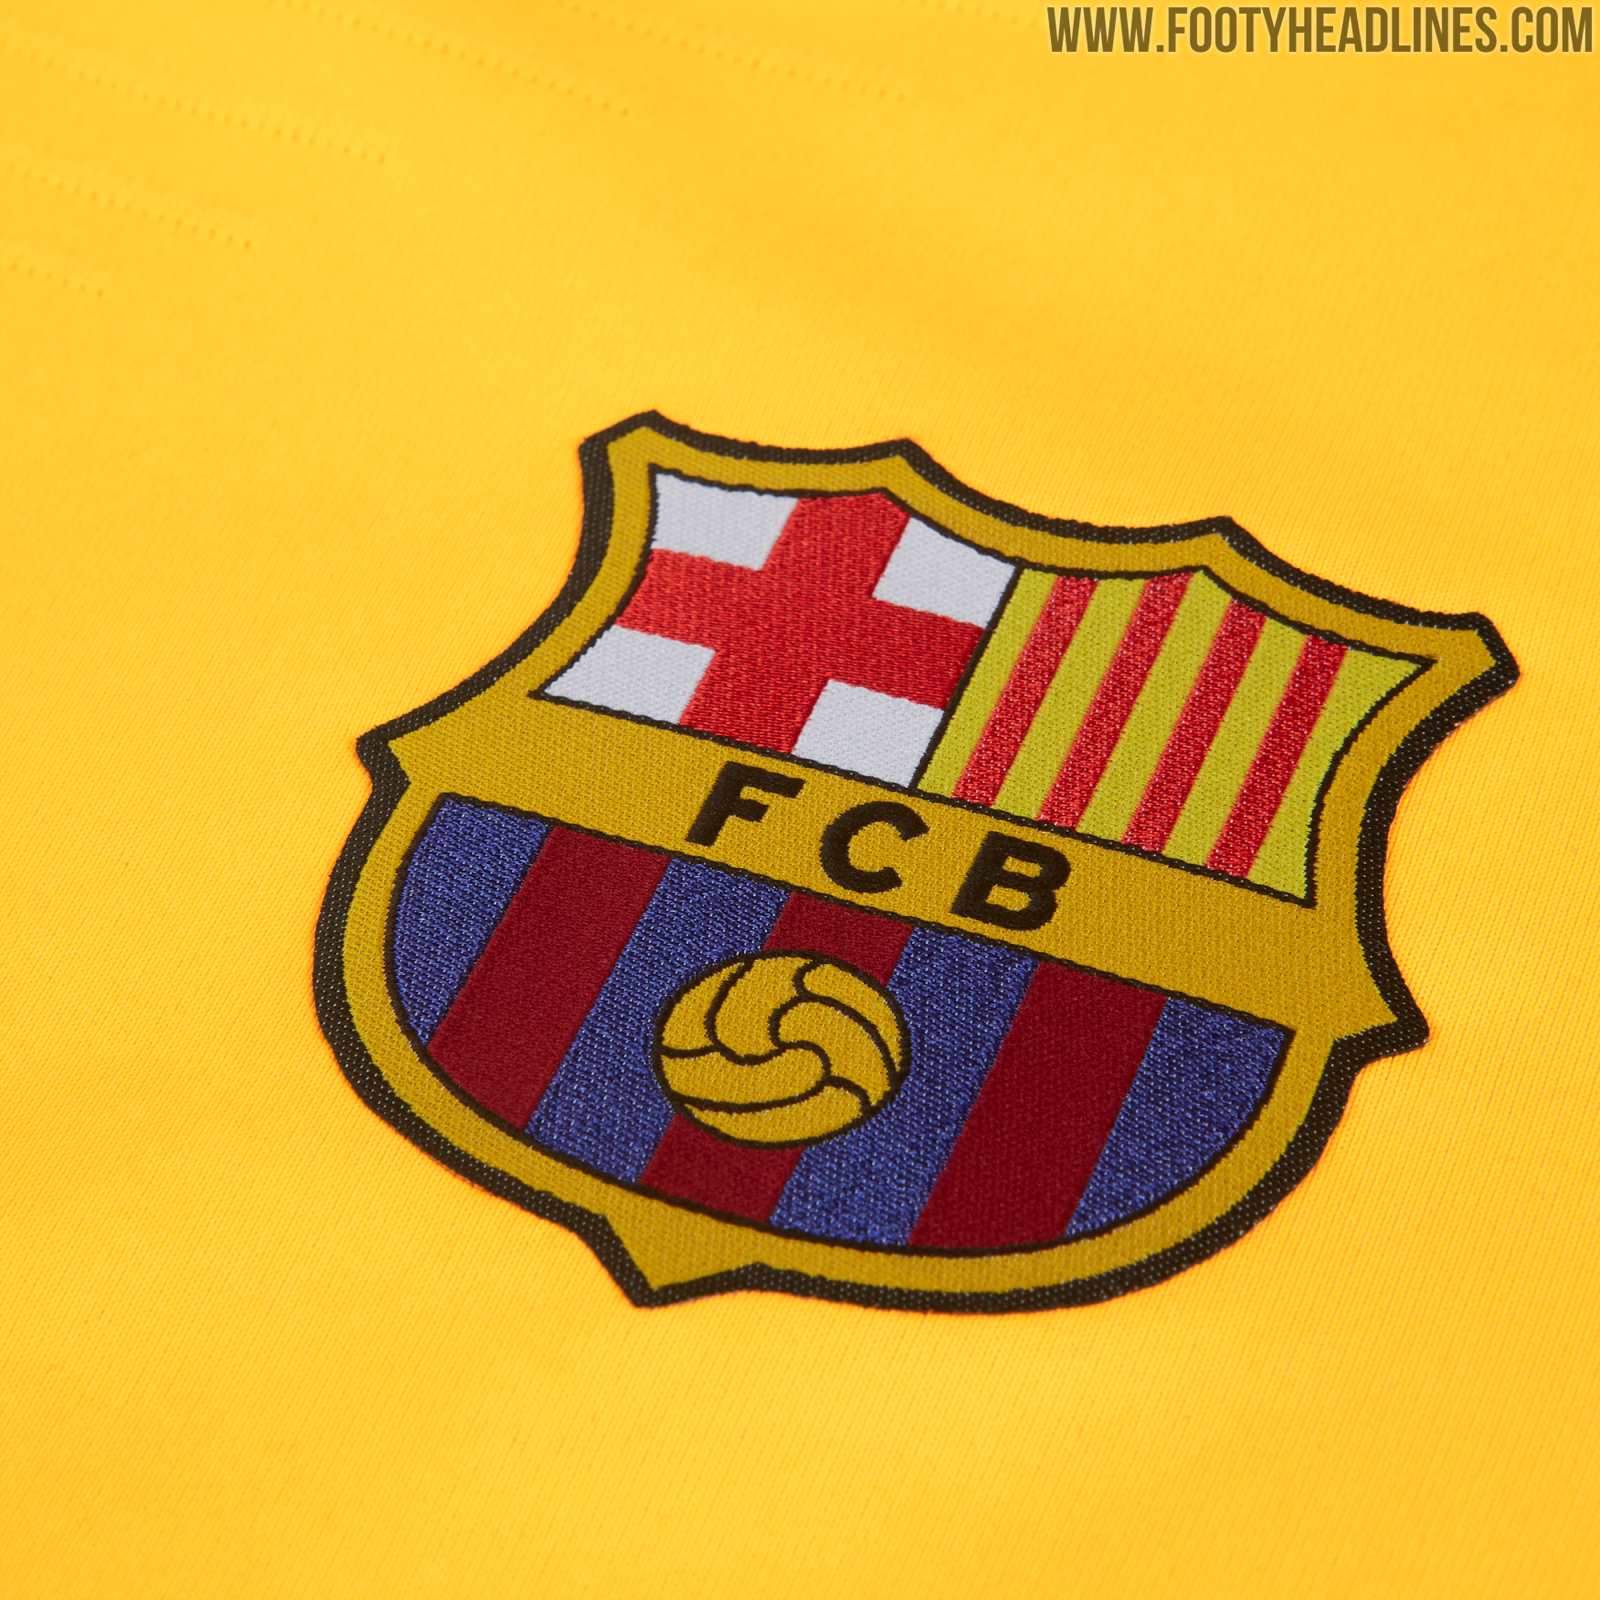 Barcelona 19-20 Away Kit Revealed - Footy Headlines